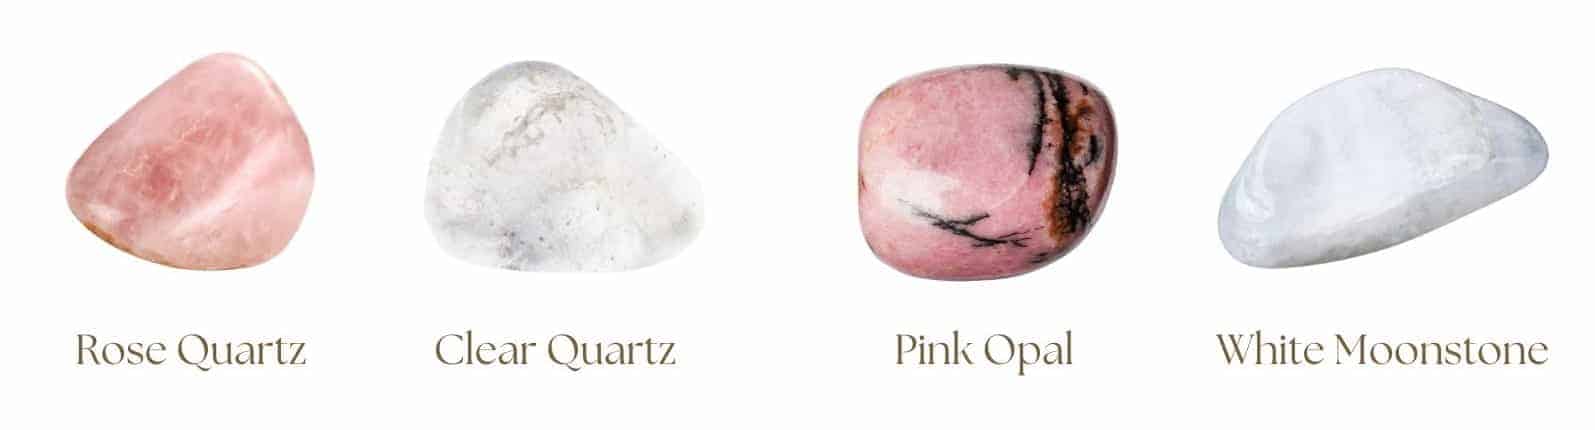 Power bracelet for women with moonstone, pink opal, clear quartz and rose quartz